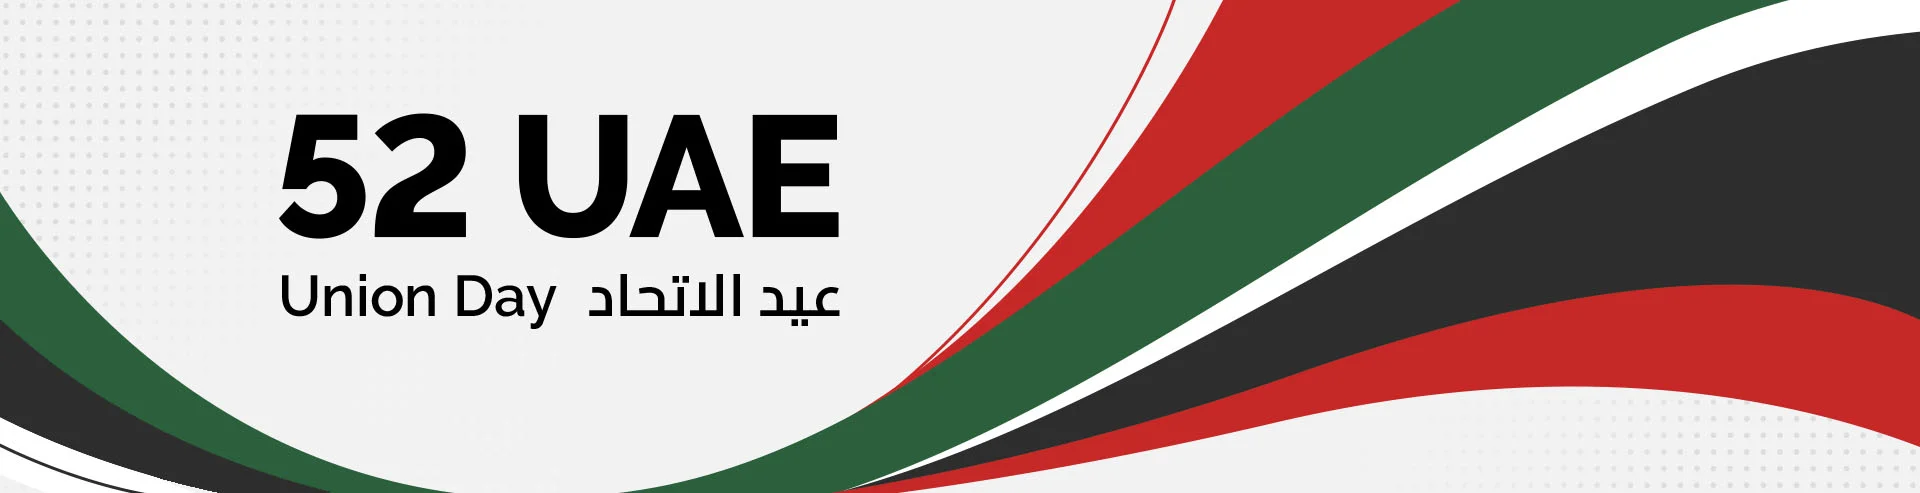 VM-Hero-UAE Union Day-1920x493.webp